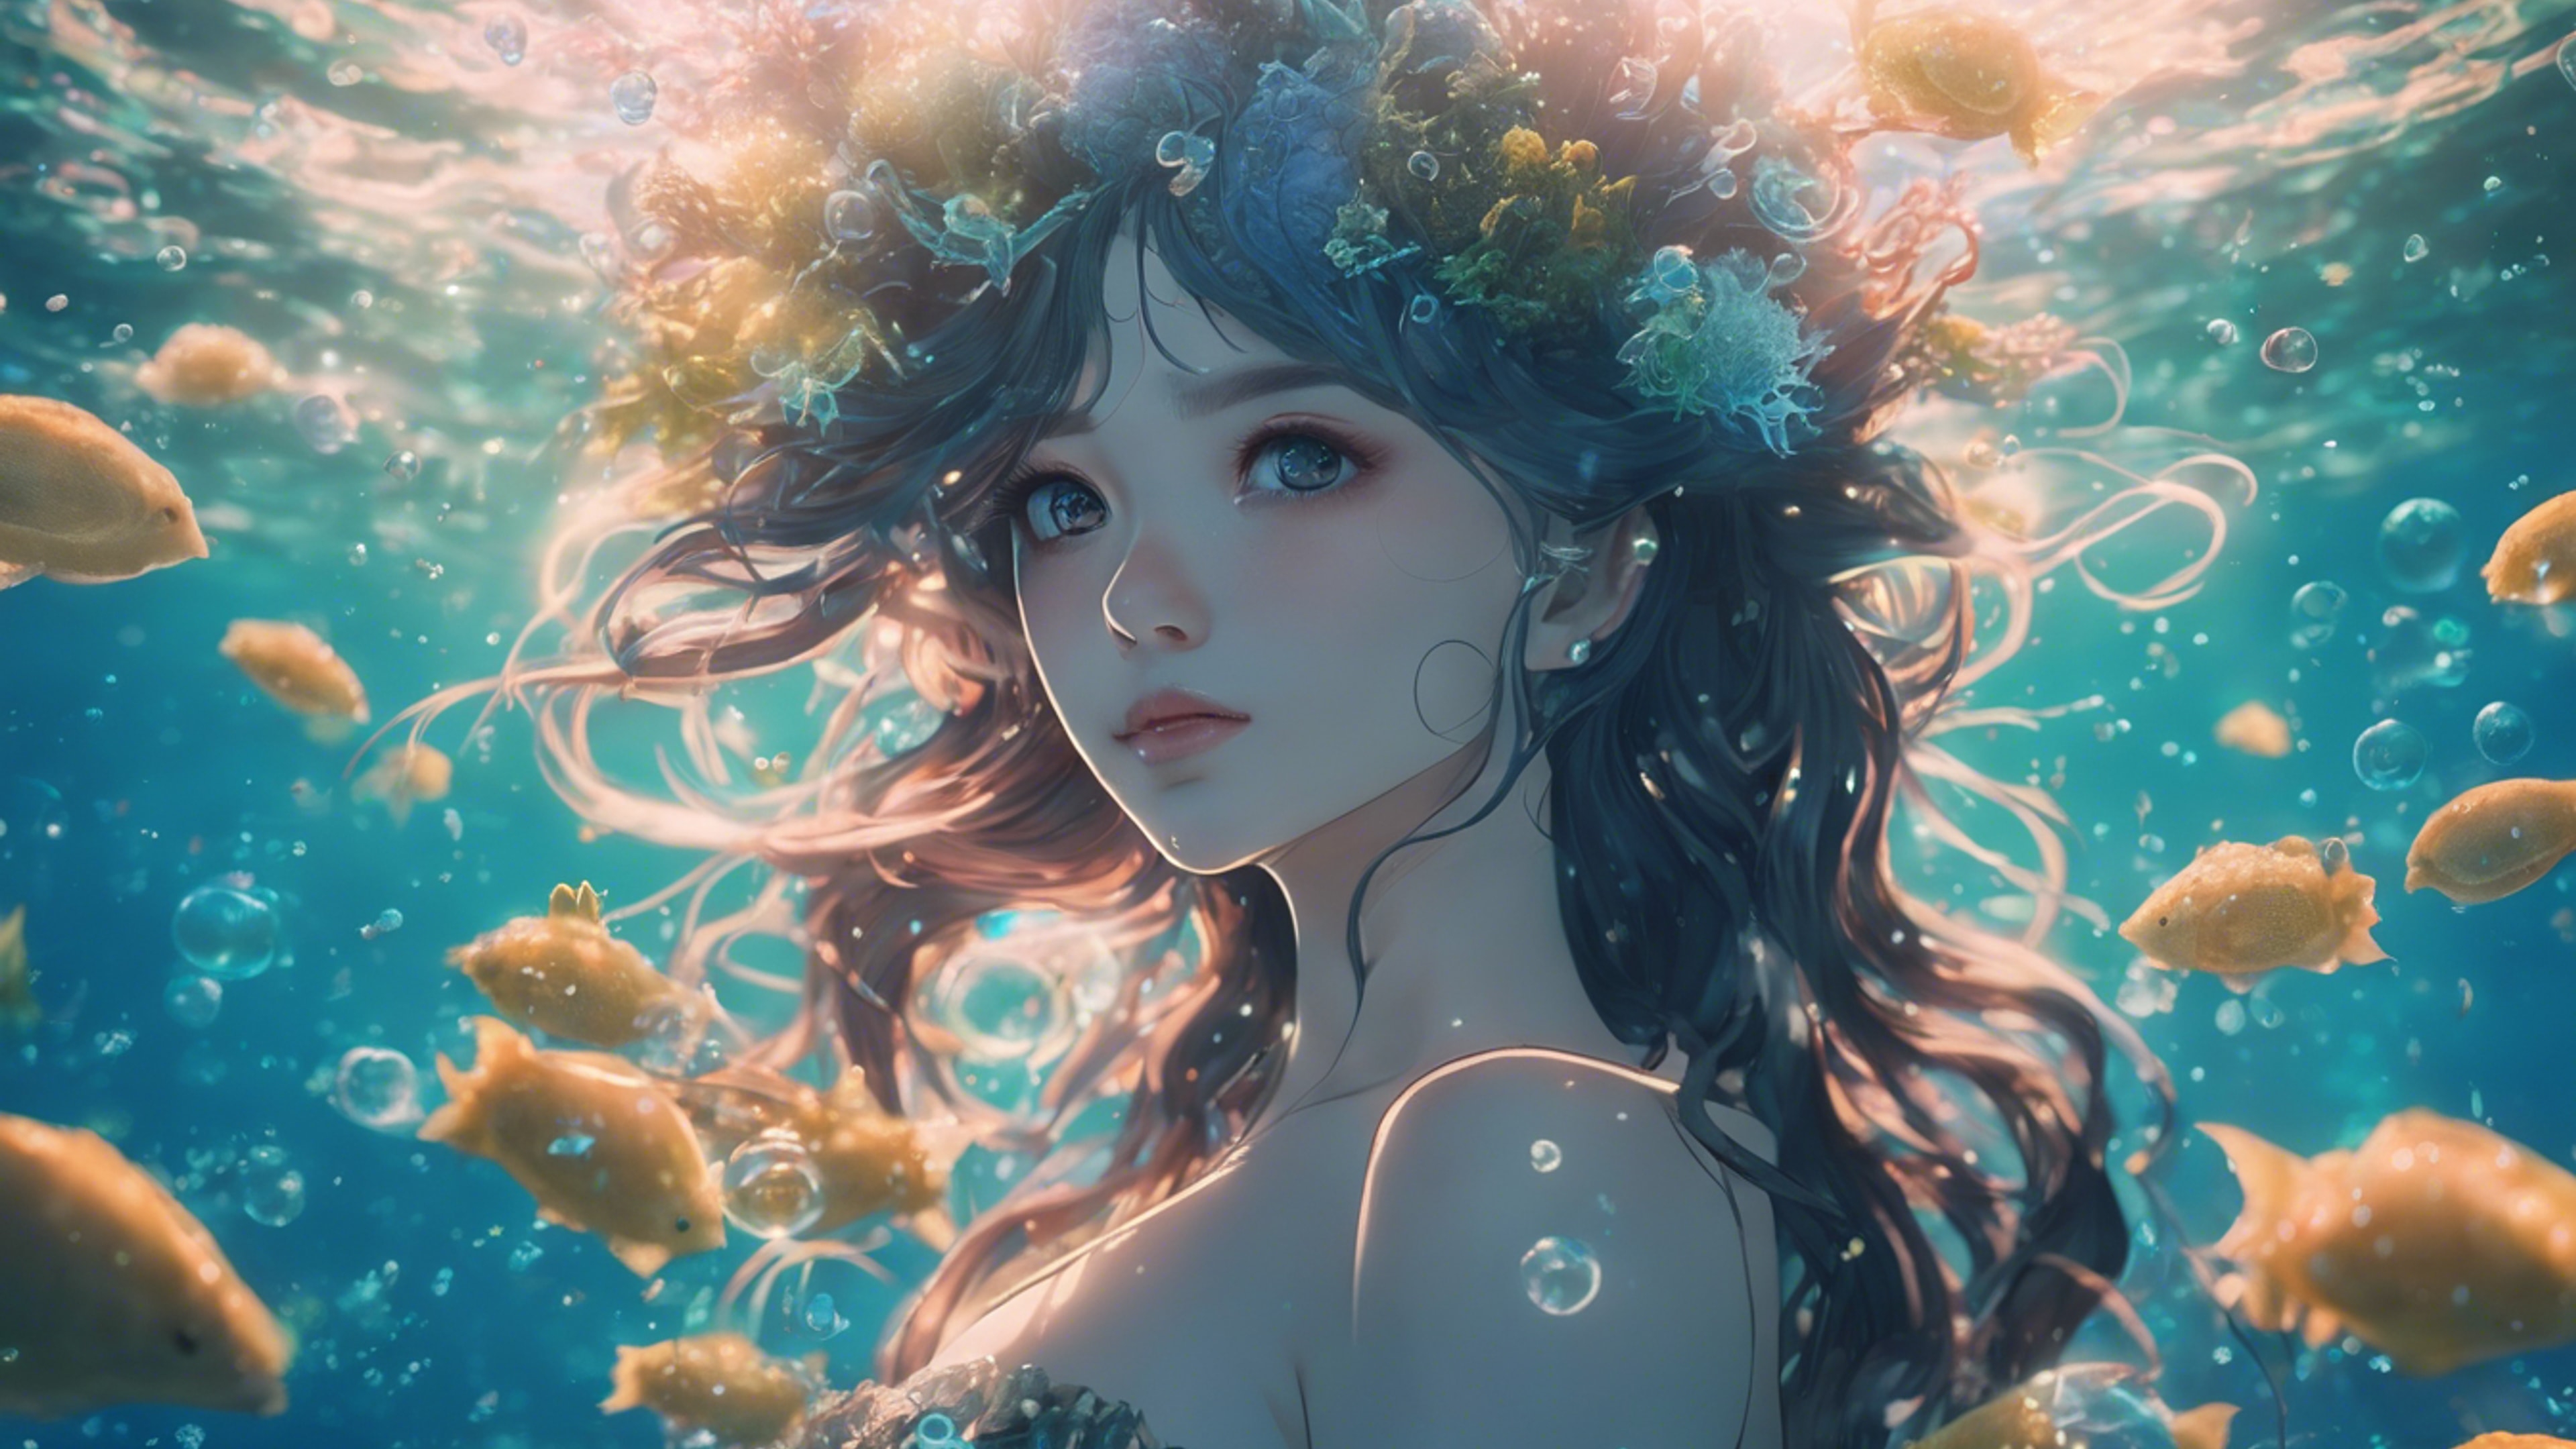 Anime-inspired underwater mermaid kingdom glittering with bioluminescent organisms. 벽지[b6d868a85fc94f08be6c]